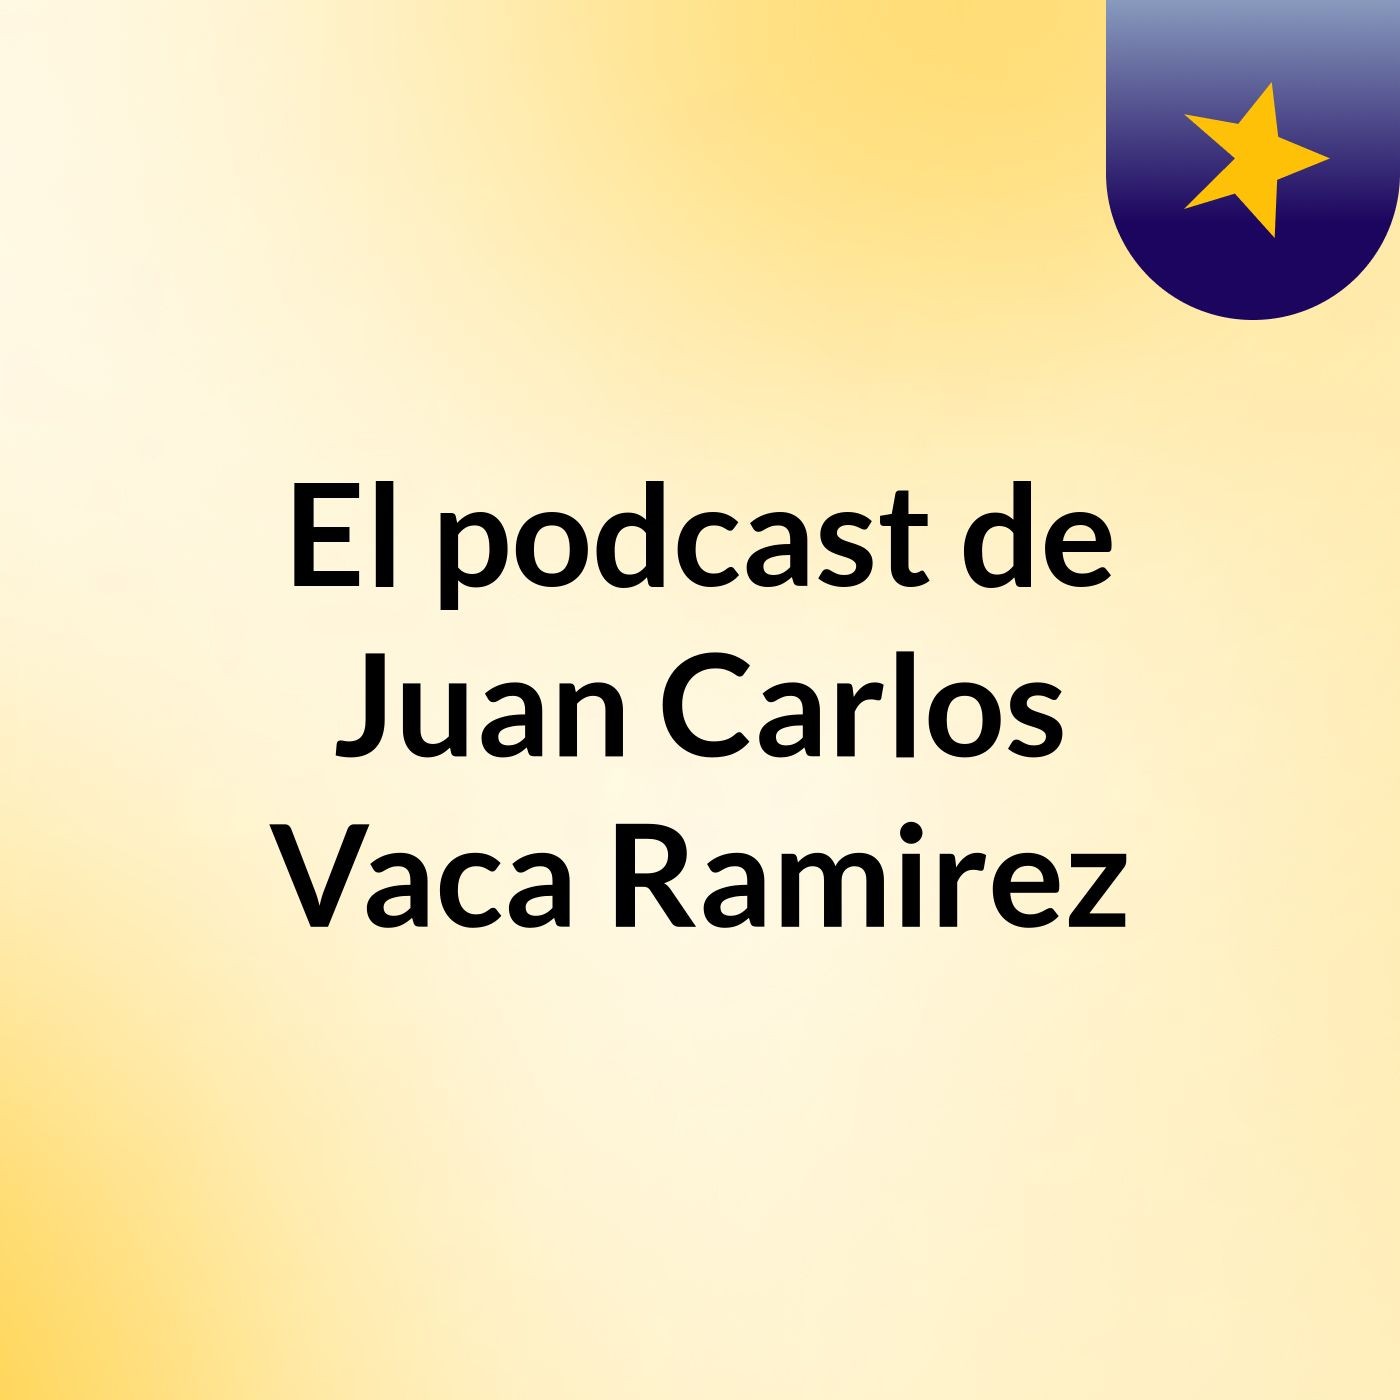 El podcast de Juan Carlos Vaca Ramirez